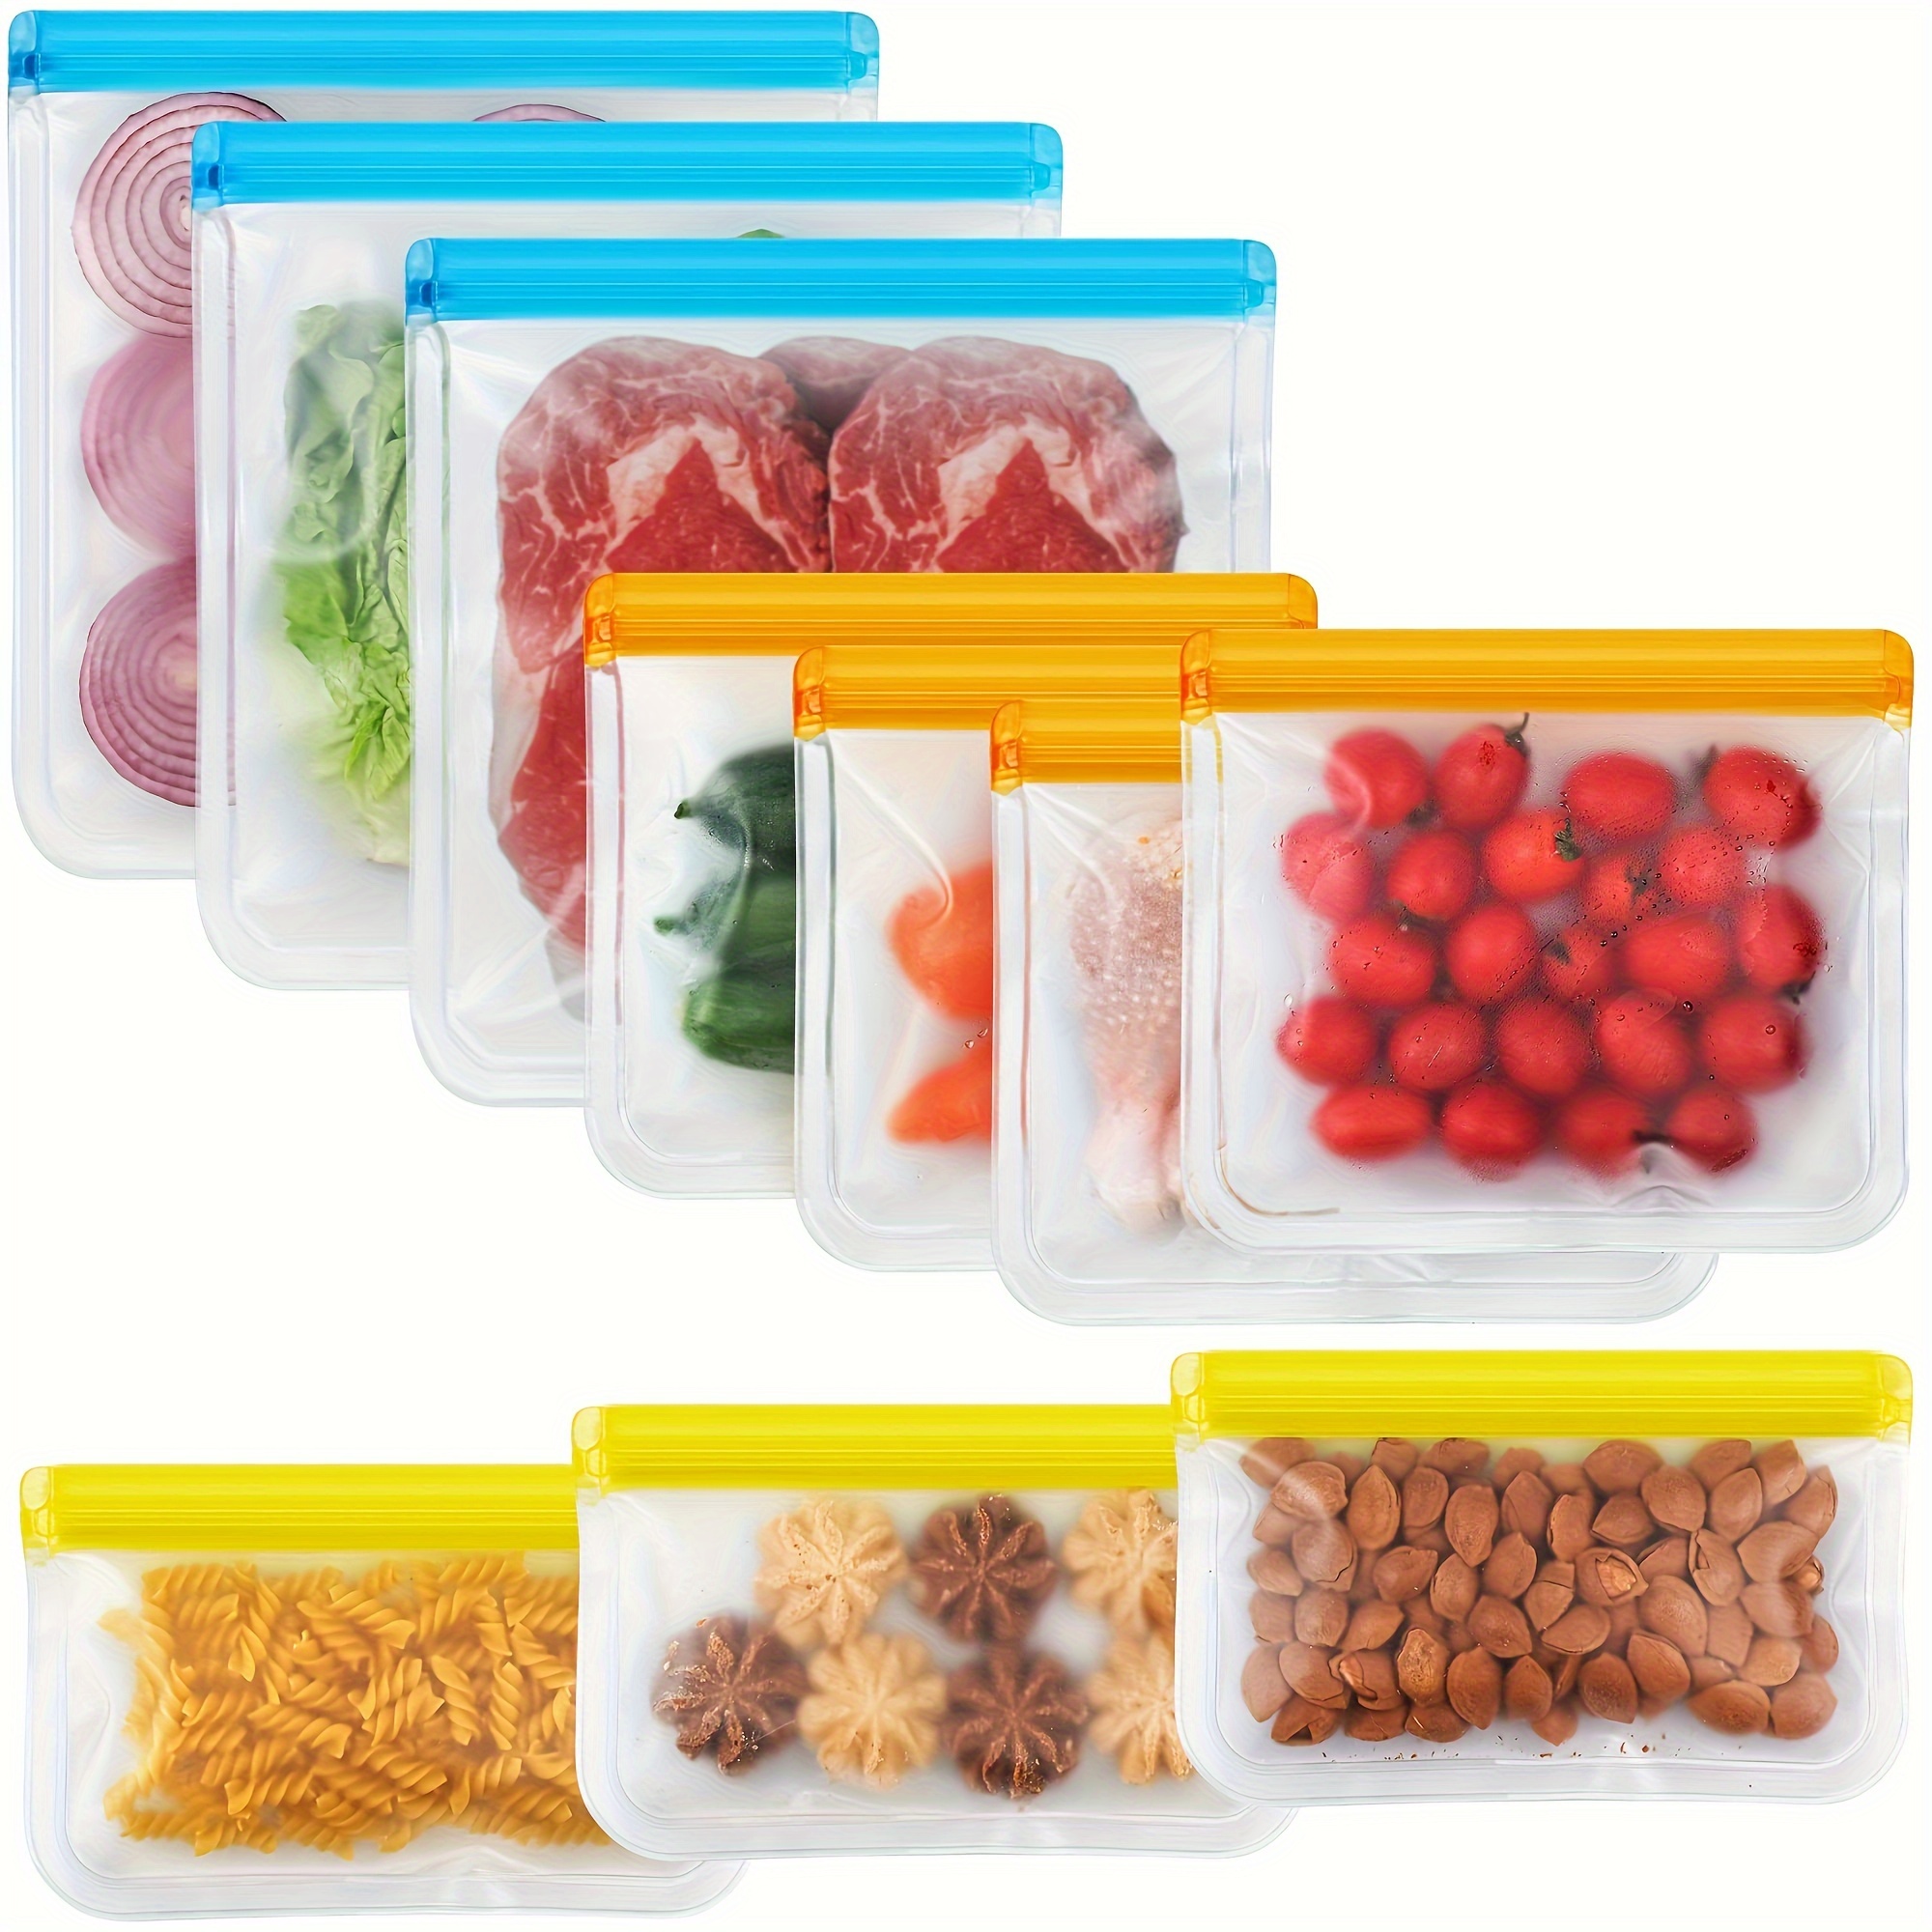 Stand-Up Reusable Gallon Freezer Bags (1 Gallon, Set of 4) - Leakproof  Ziplock Reusable Storage Bags for Sandwich, Snack, Meat, Vegetables, Fruit  etc.